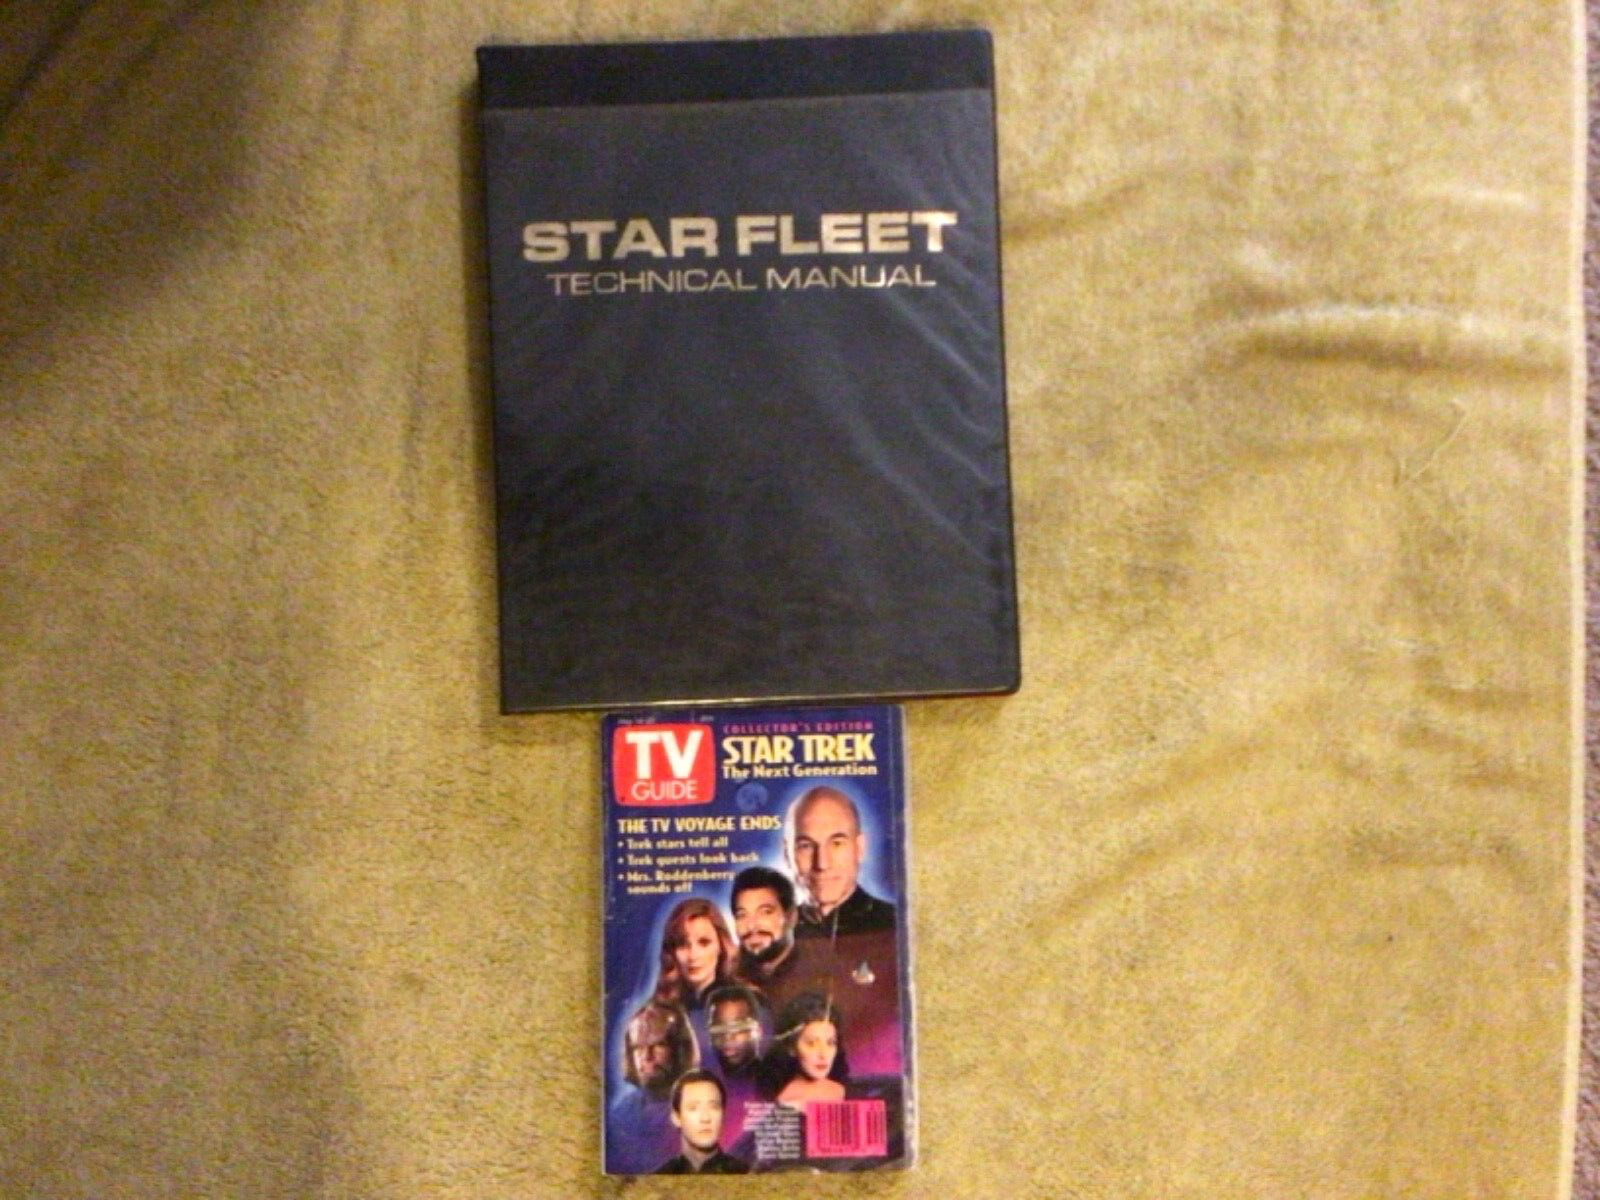 VINTAGE 1975 STAR TREK STAR FLEET TECHNICAL MANUAL 1ST EDITION BOOK + TV Guide